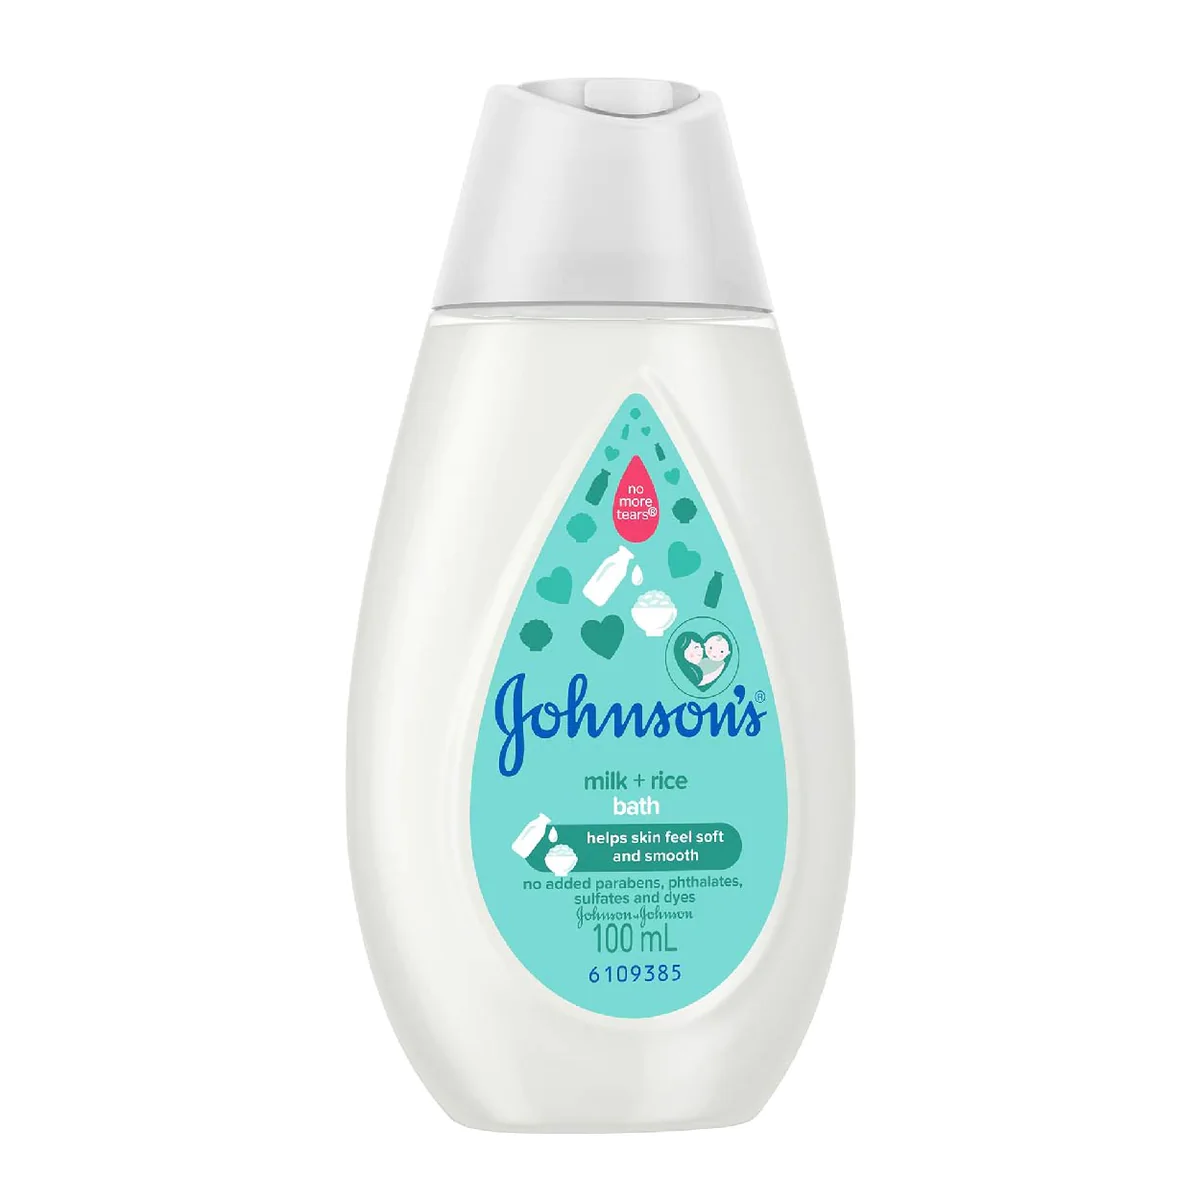 Buy Johnson's baby bath milk + rice 100ml online with MedsGo